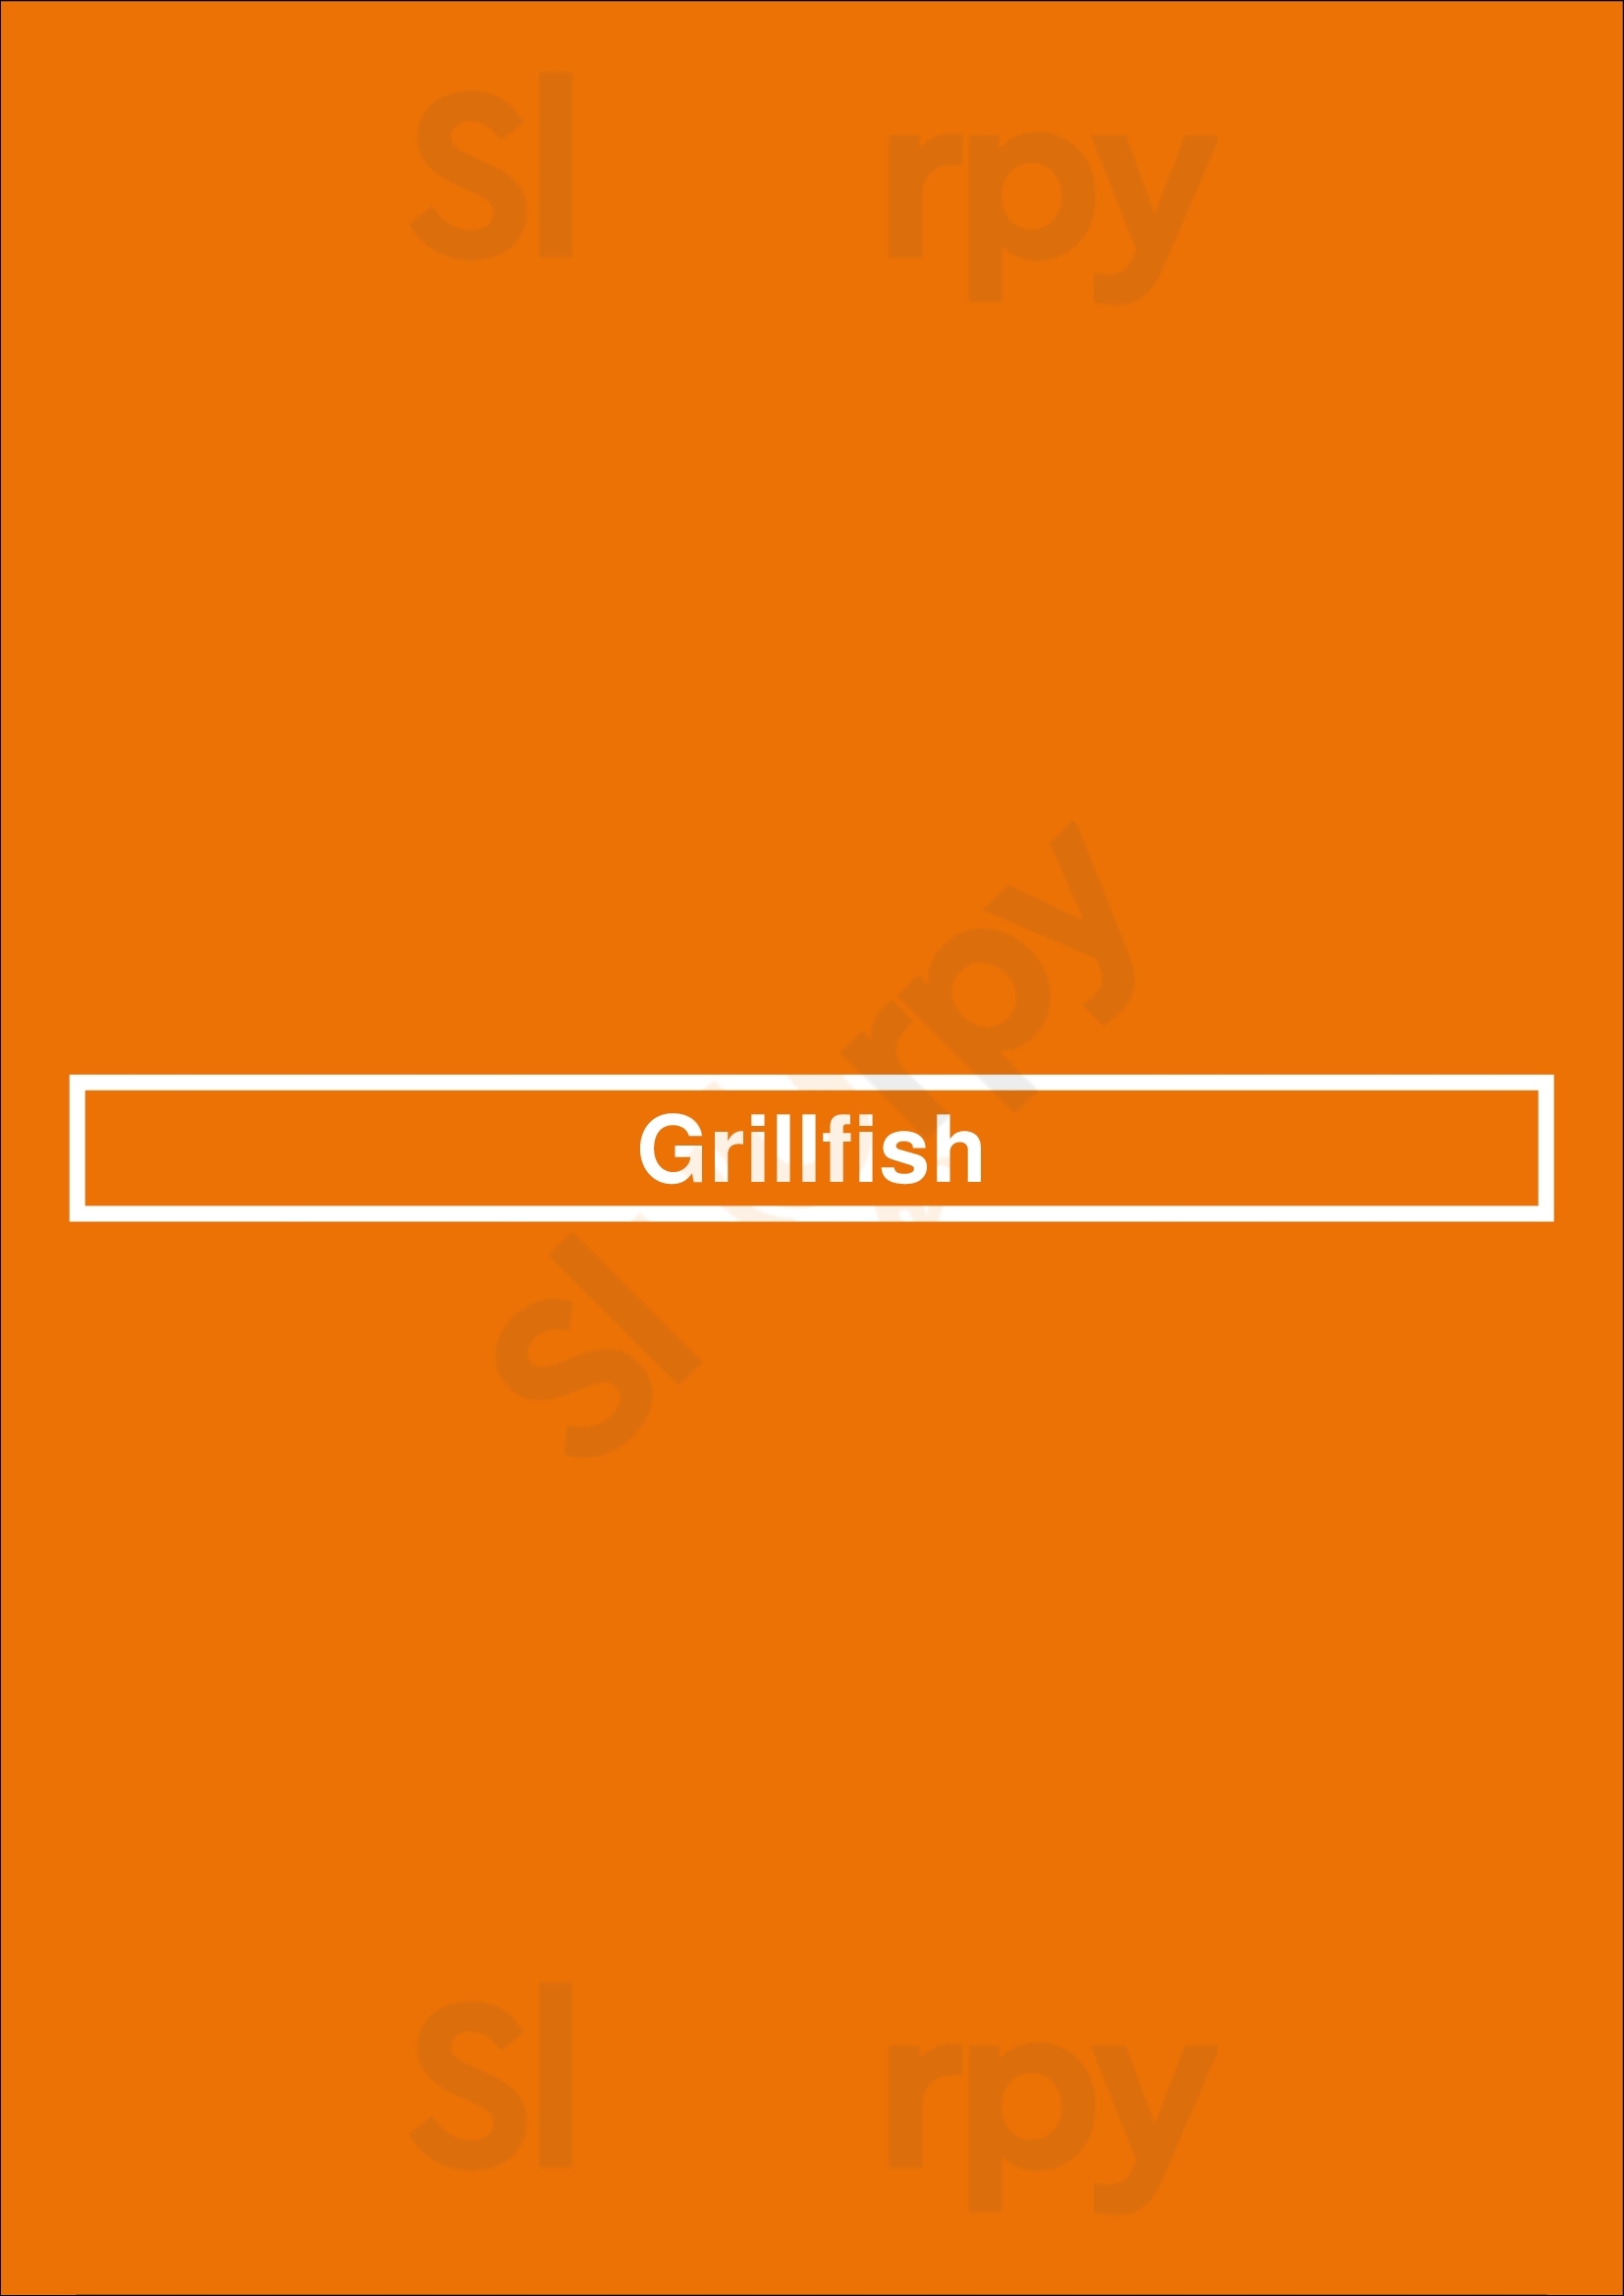 Grillfish Washington DC Menu - 1